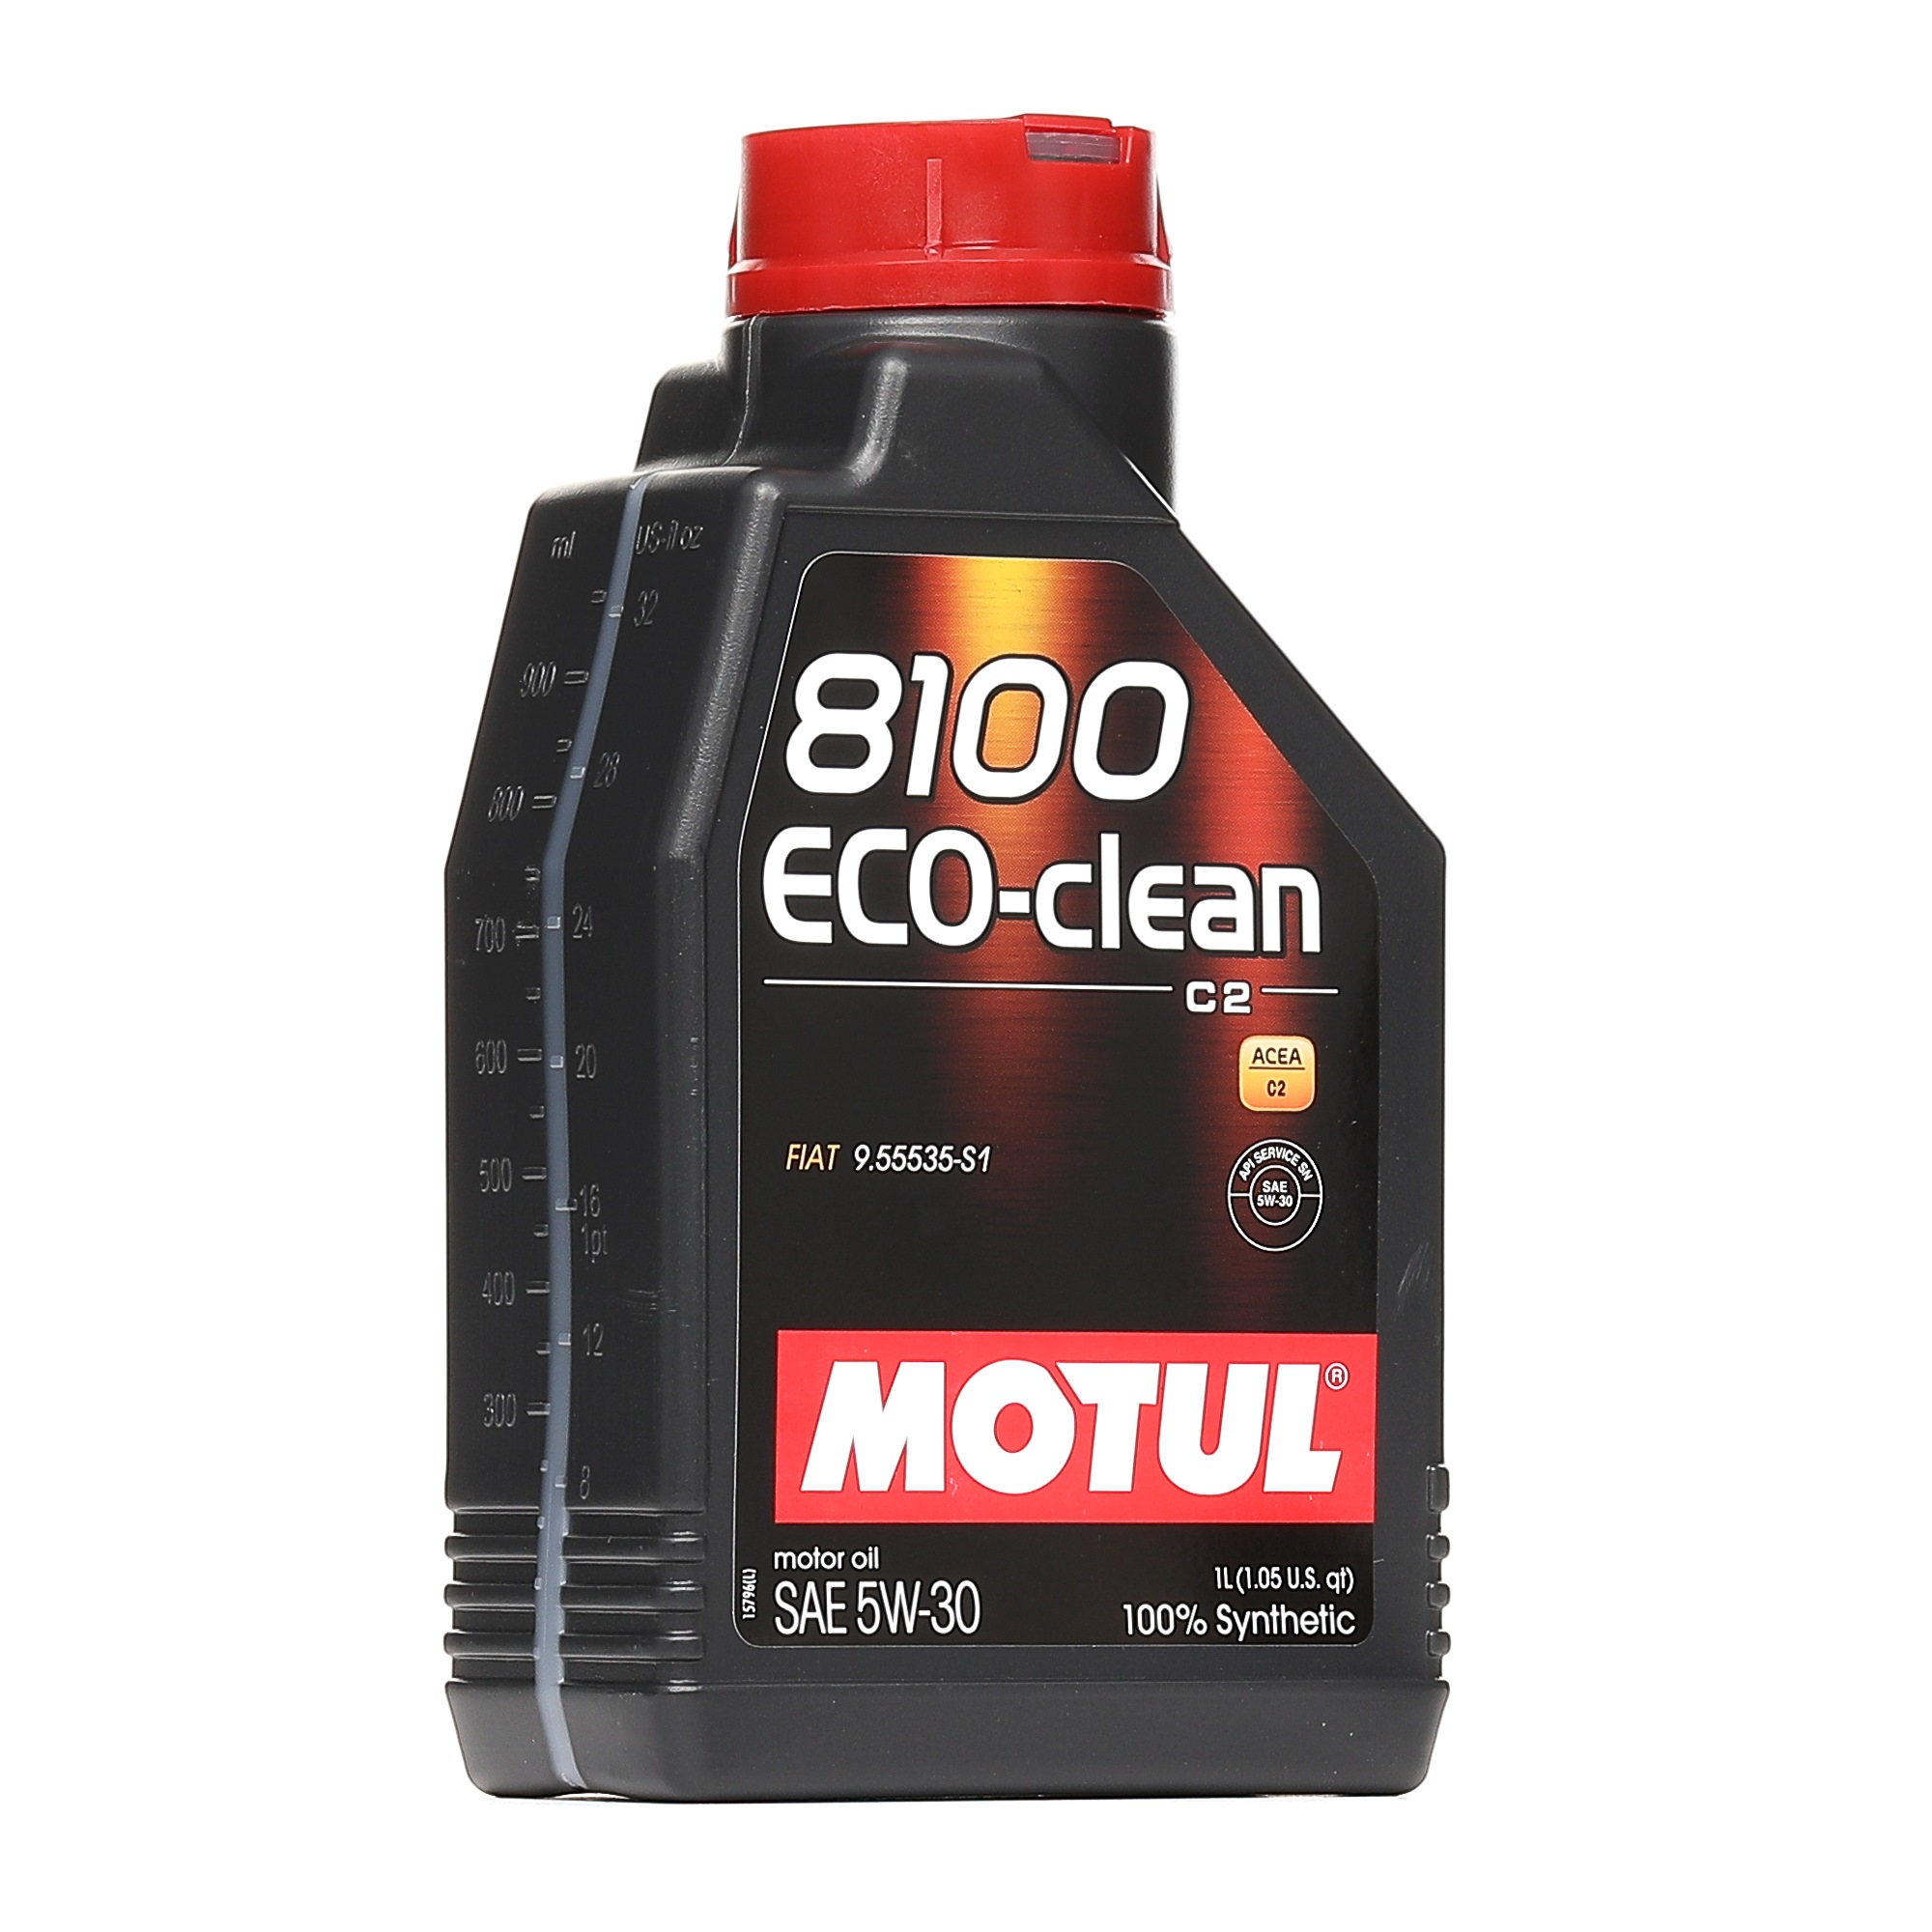 Automobile oil PSA B71 2290 MOTUL - 109233 ECO-CLEAN